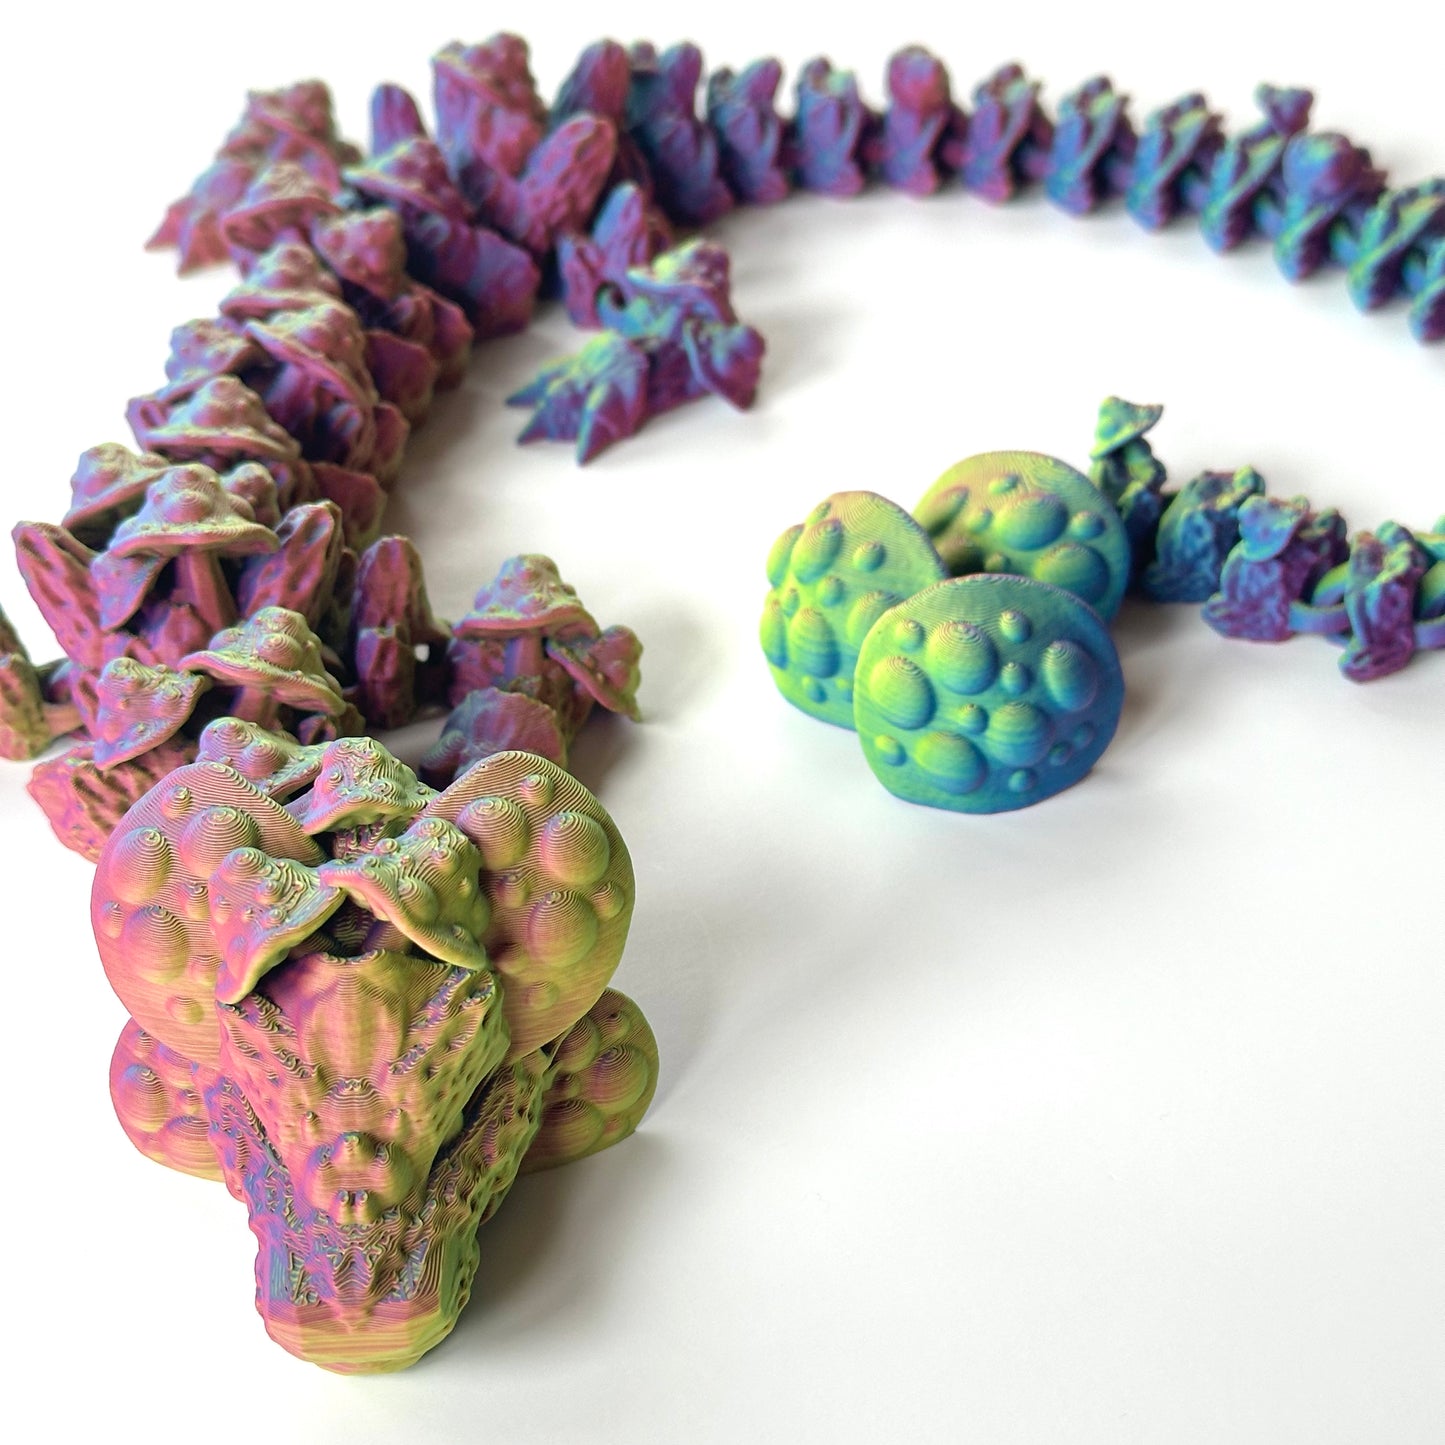 Large Mushroom Dragon - 3D Printed Articulating Figure